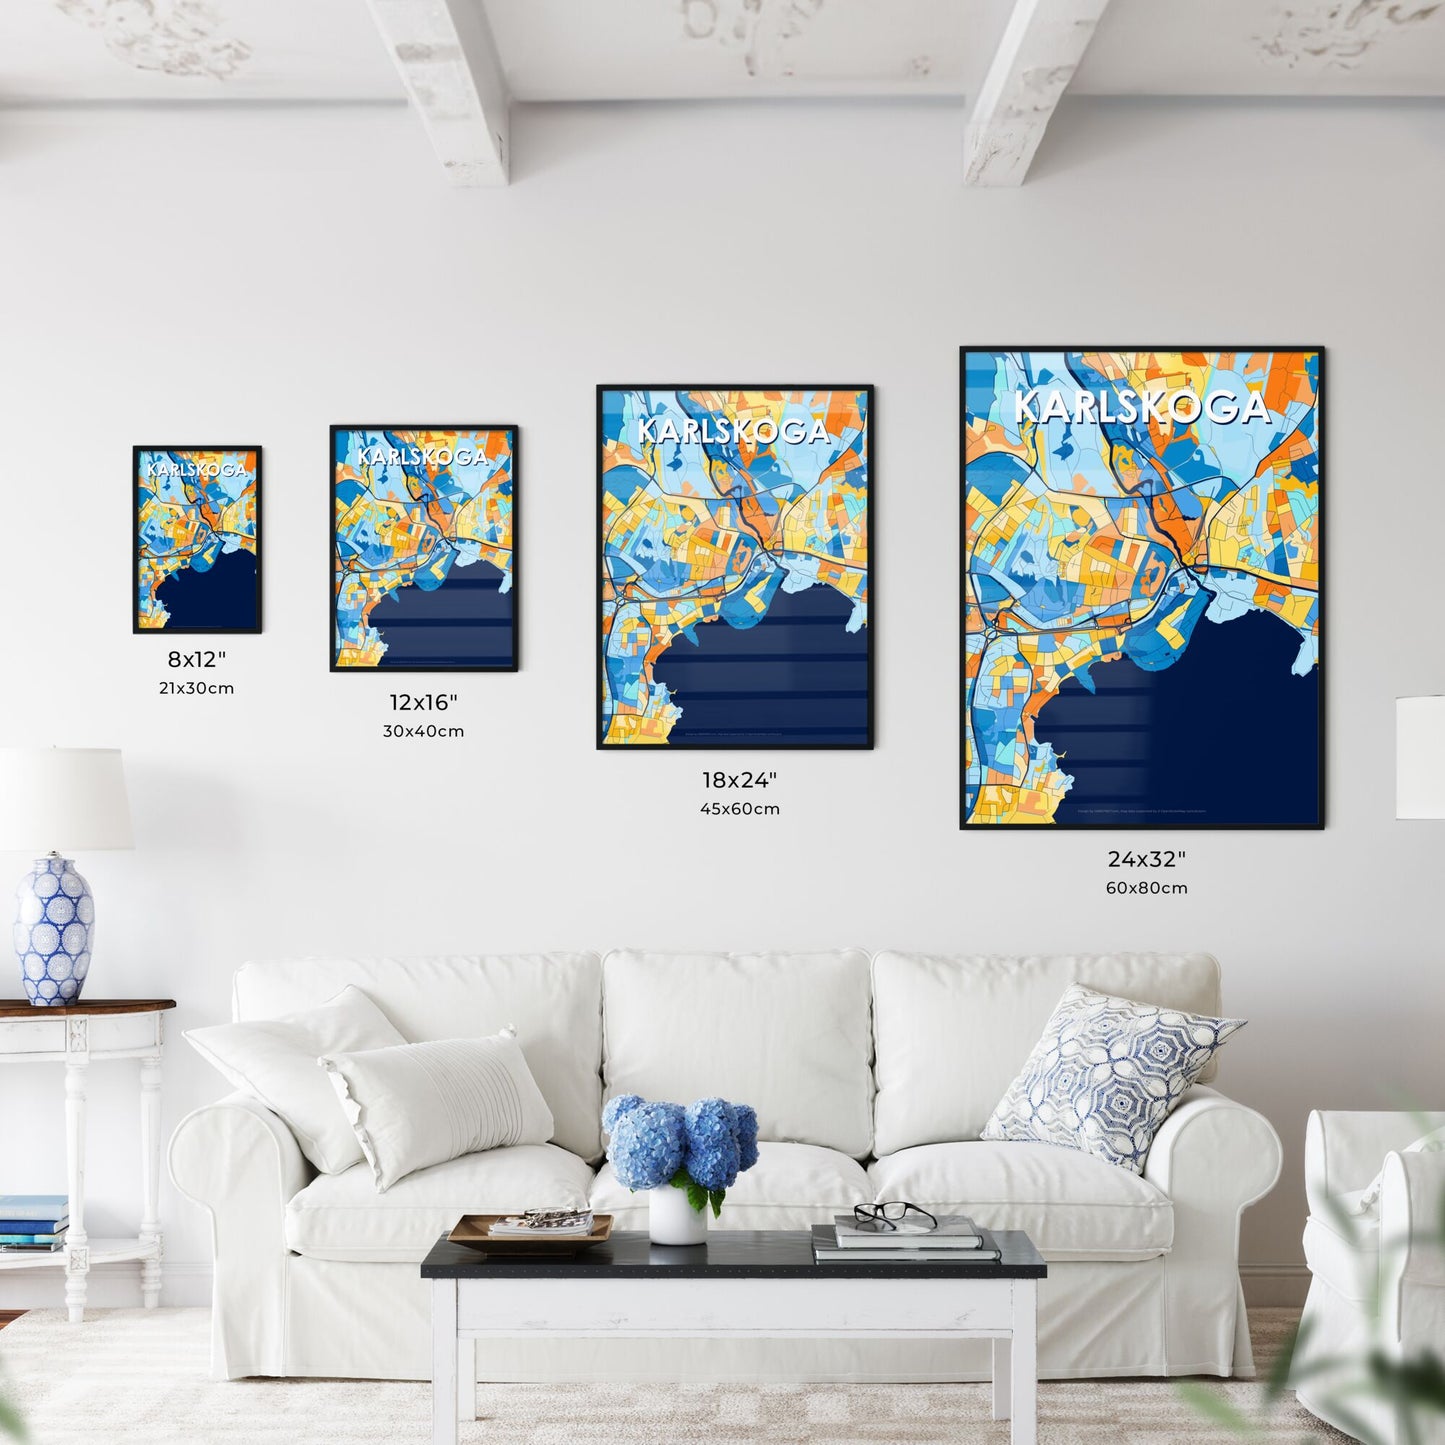 KARLSKOGA SWEDEN Vibrant Colorful Art Map Poster Blue Orange